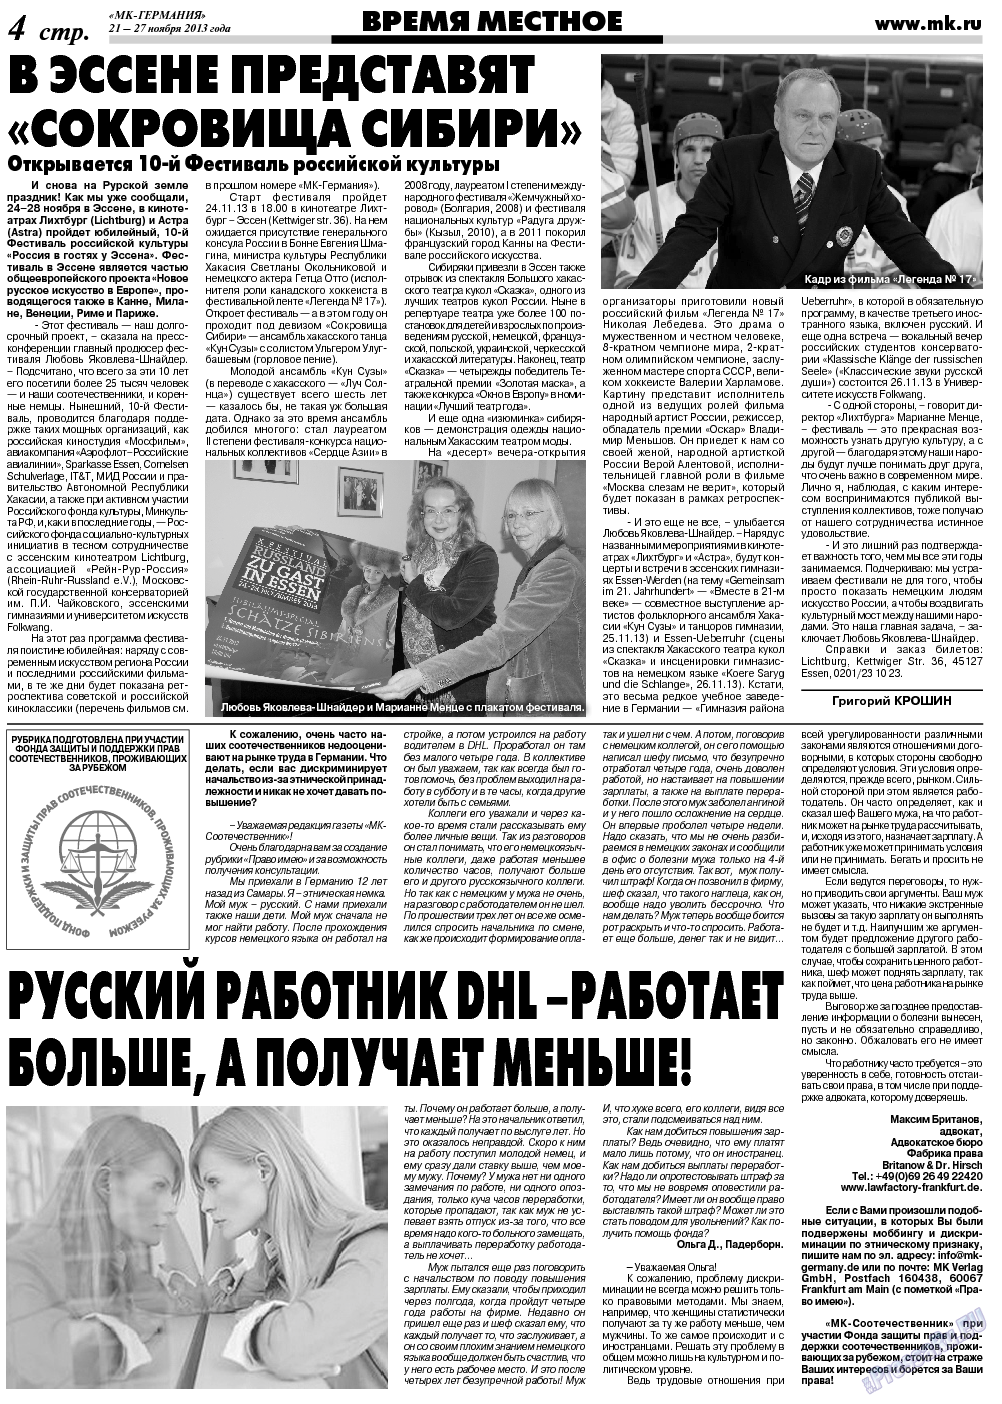 МК-Германия, газета. 2013 №47 стр.4